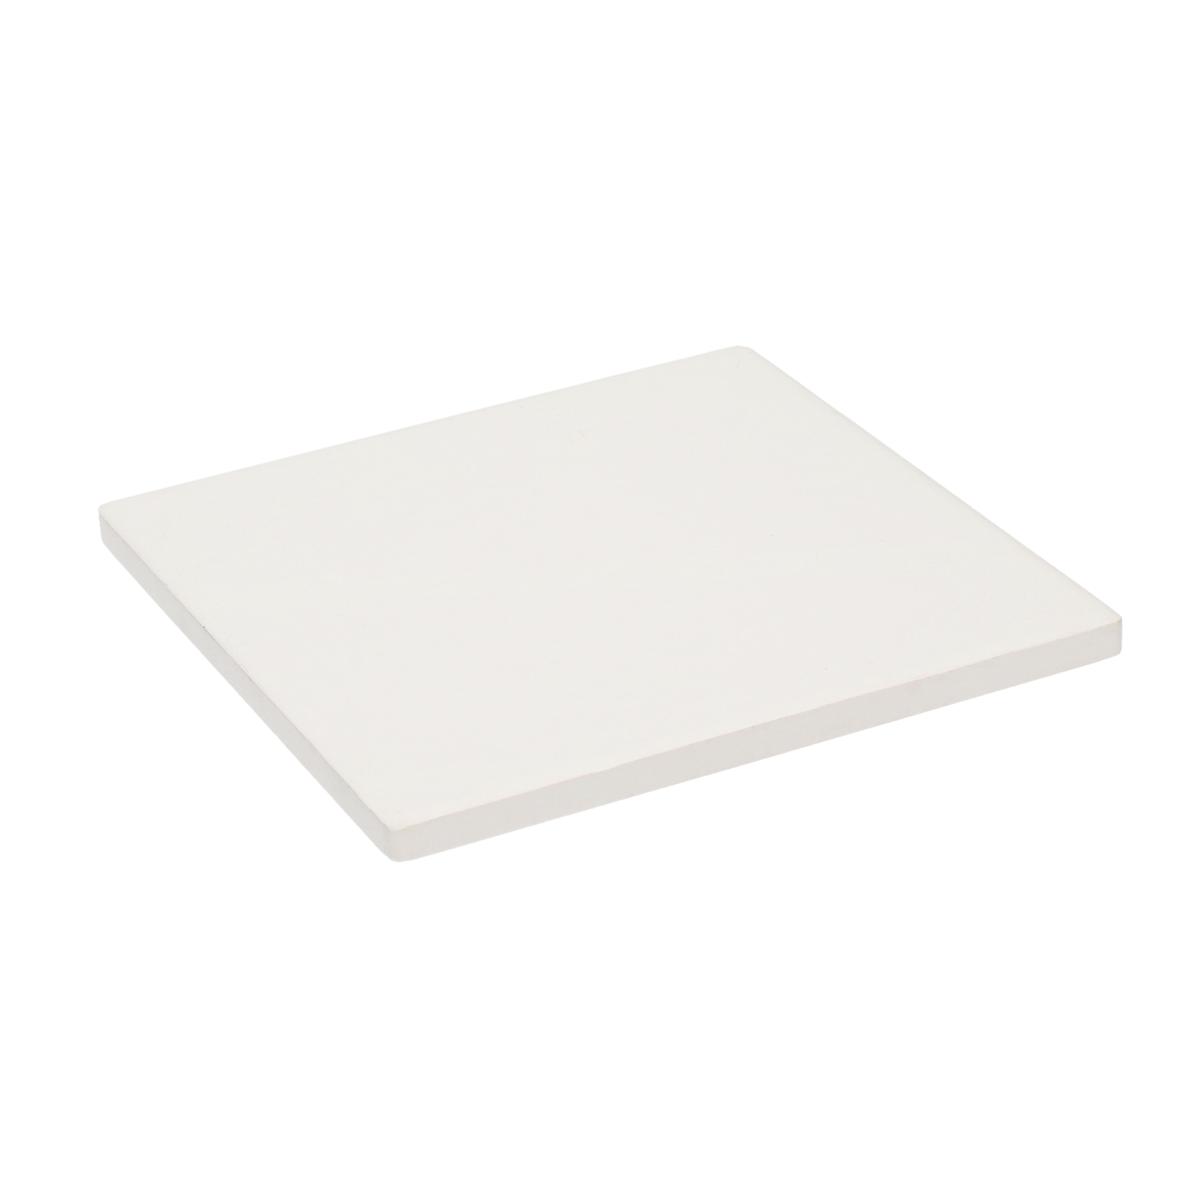 Absorbent Ceramic Square Coaster with Non-Slip Cork Base - Appleton